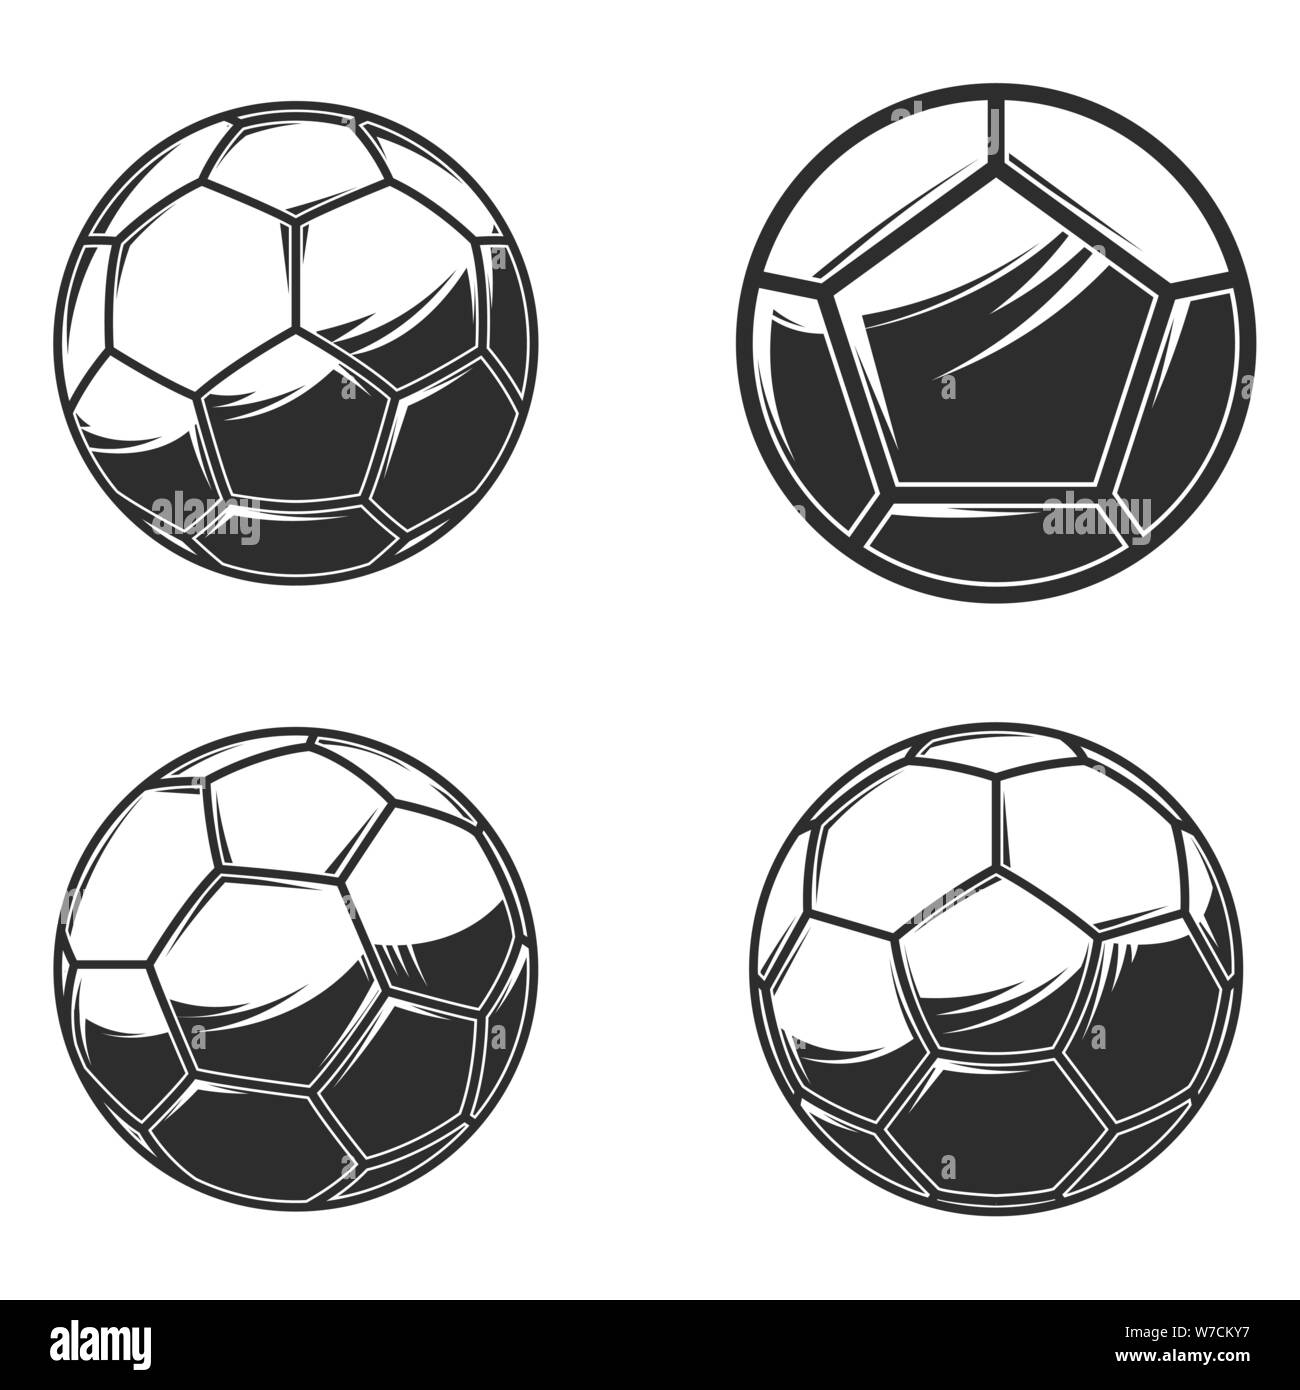 Football soccer balls on white background. Design element for logo, label, sign, poster, card, banner. Vector illustration Stock Vector